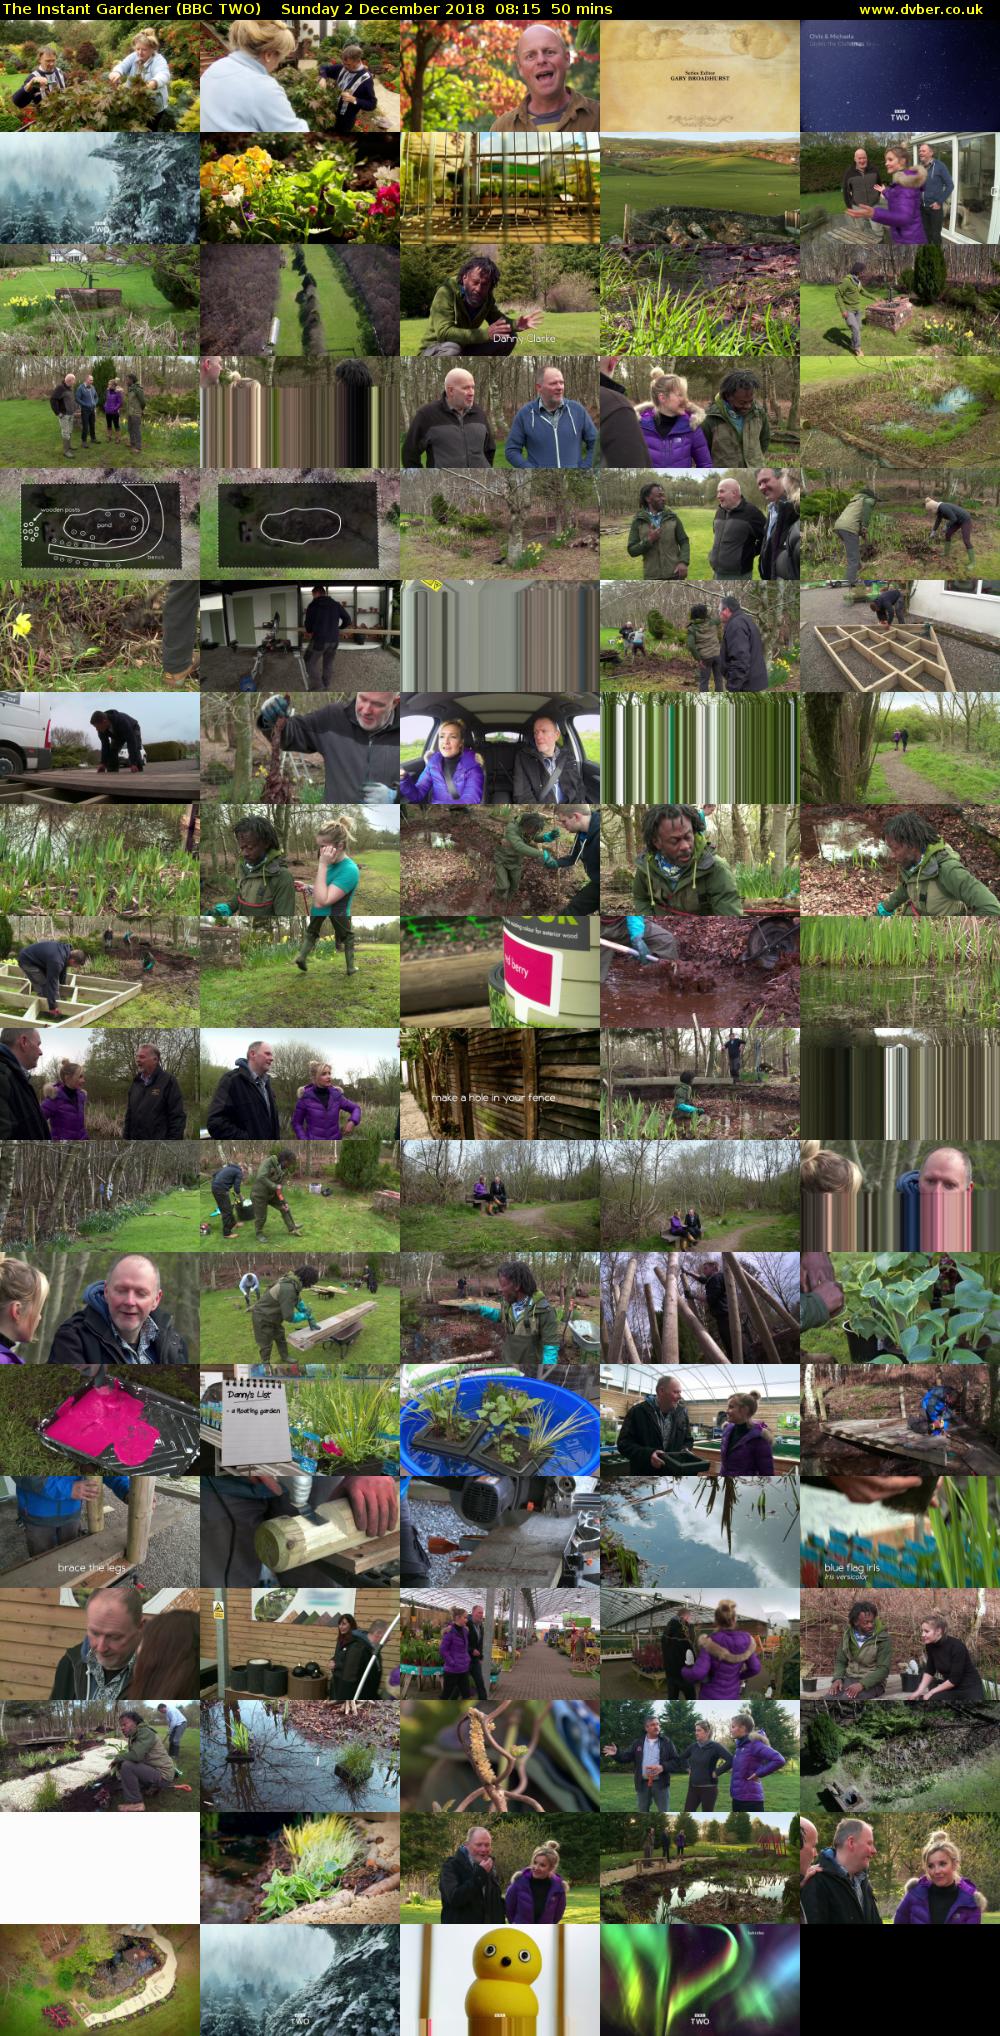 The Instant Gardener (BBC TWO) Sunday 2 December 2018 08:15 - 09:05